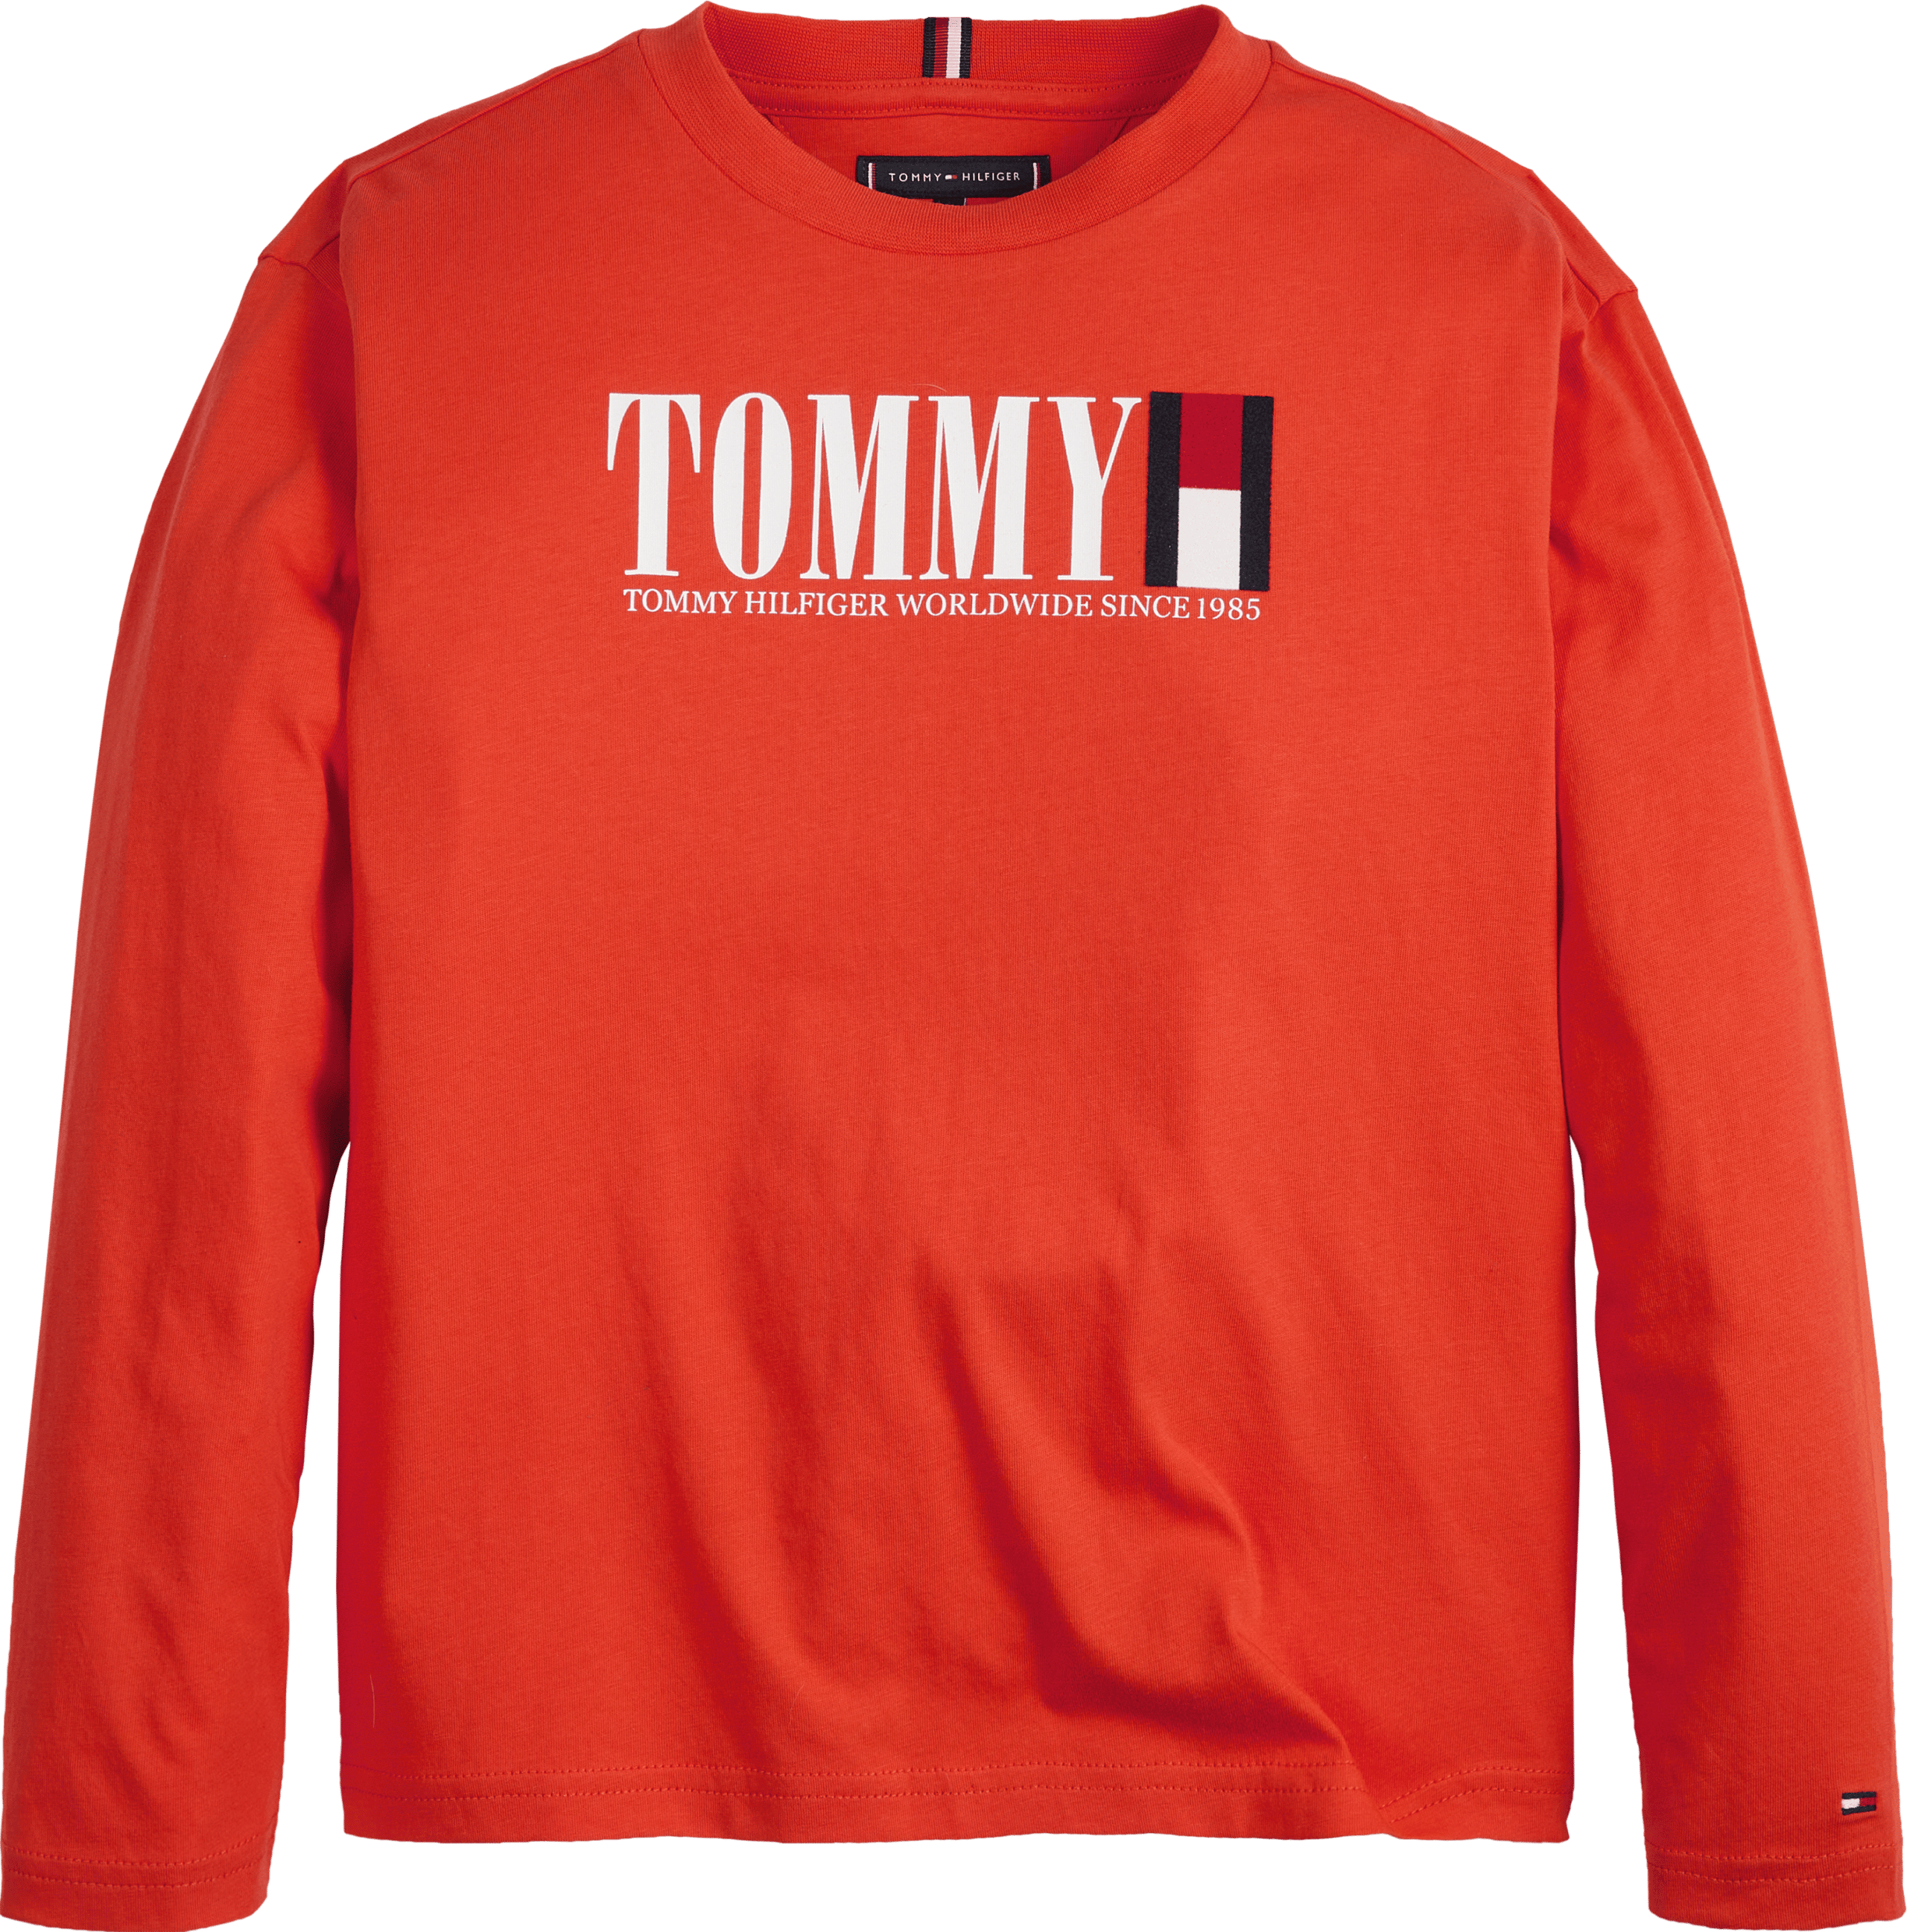 TOMMY HILFIGER KIDS - TOMMY KIDS GRAPHIC TEE L/S - KB0KB07887